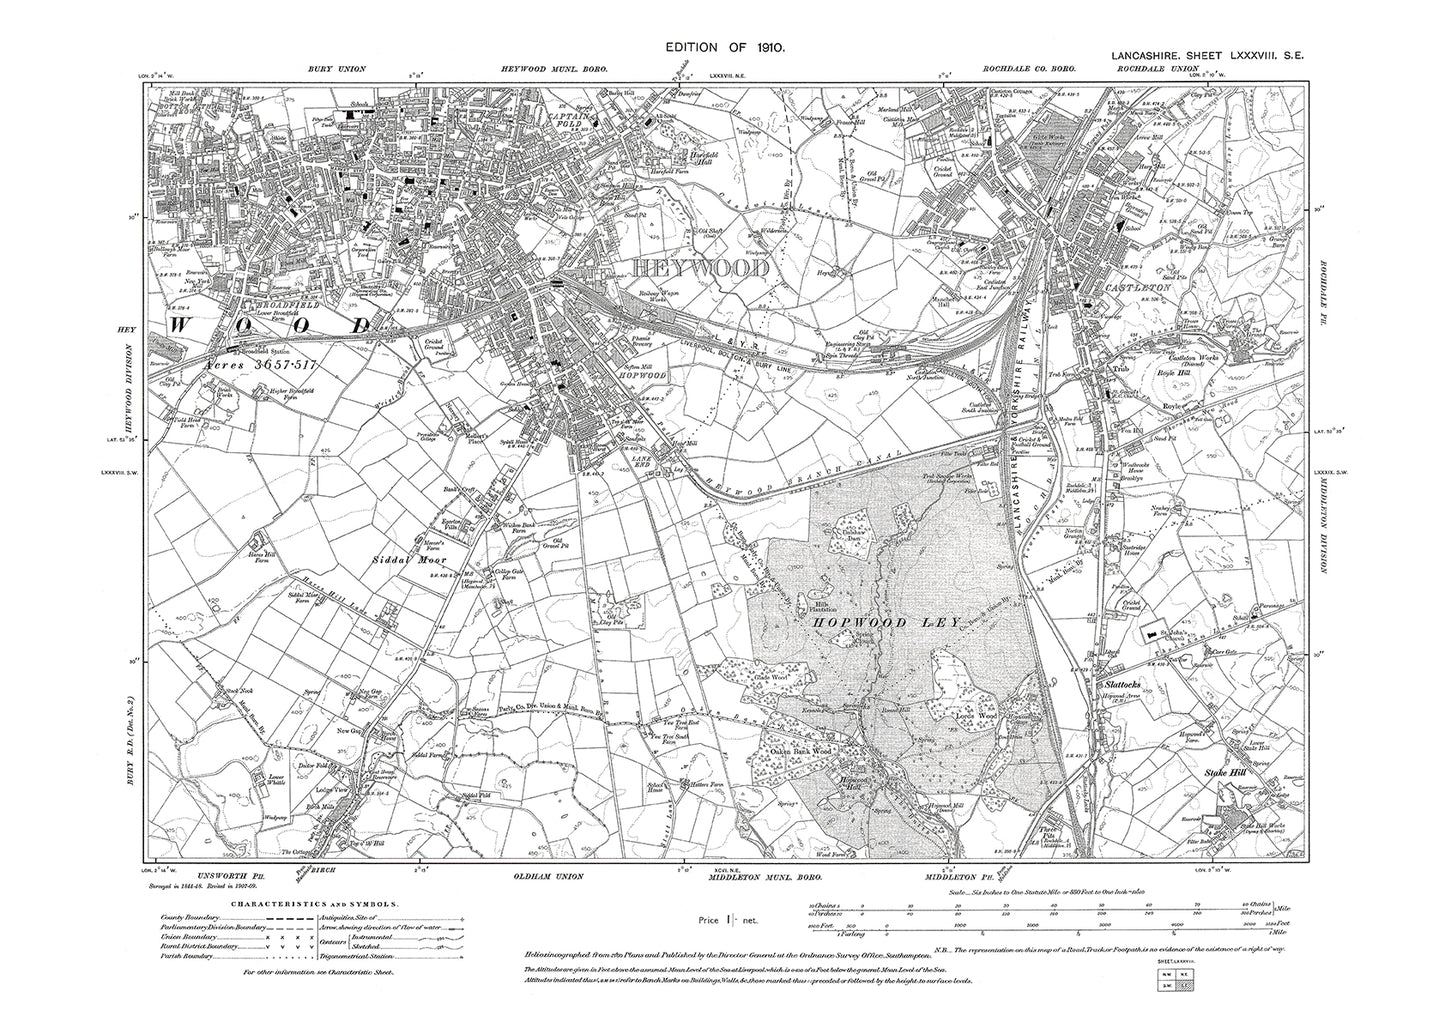 Heywood (south), Castleton - Lancashire in 1910 : 88SE